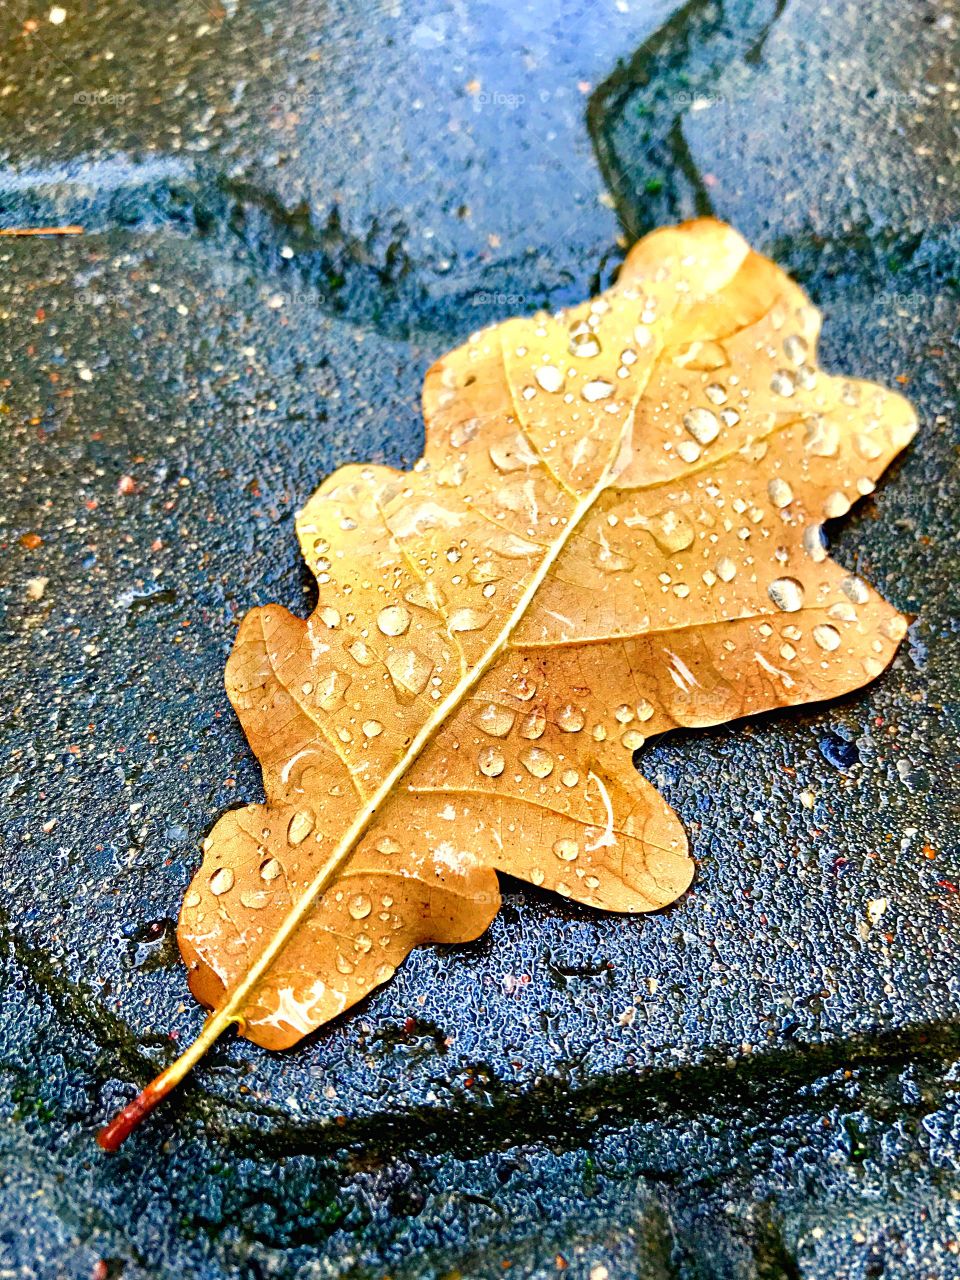 fallen oak leaf with raindrops